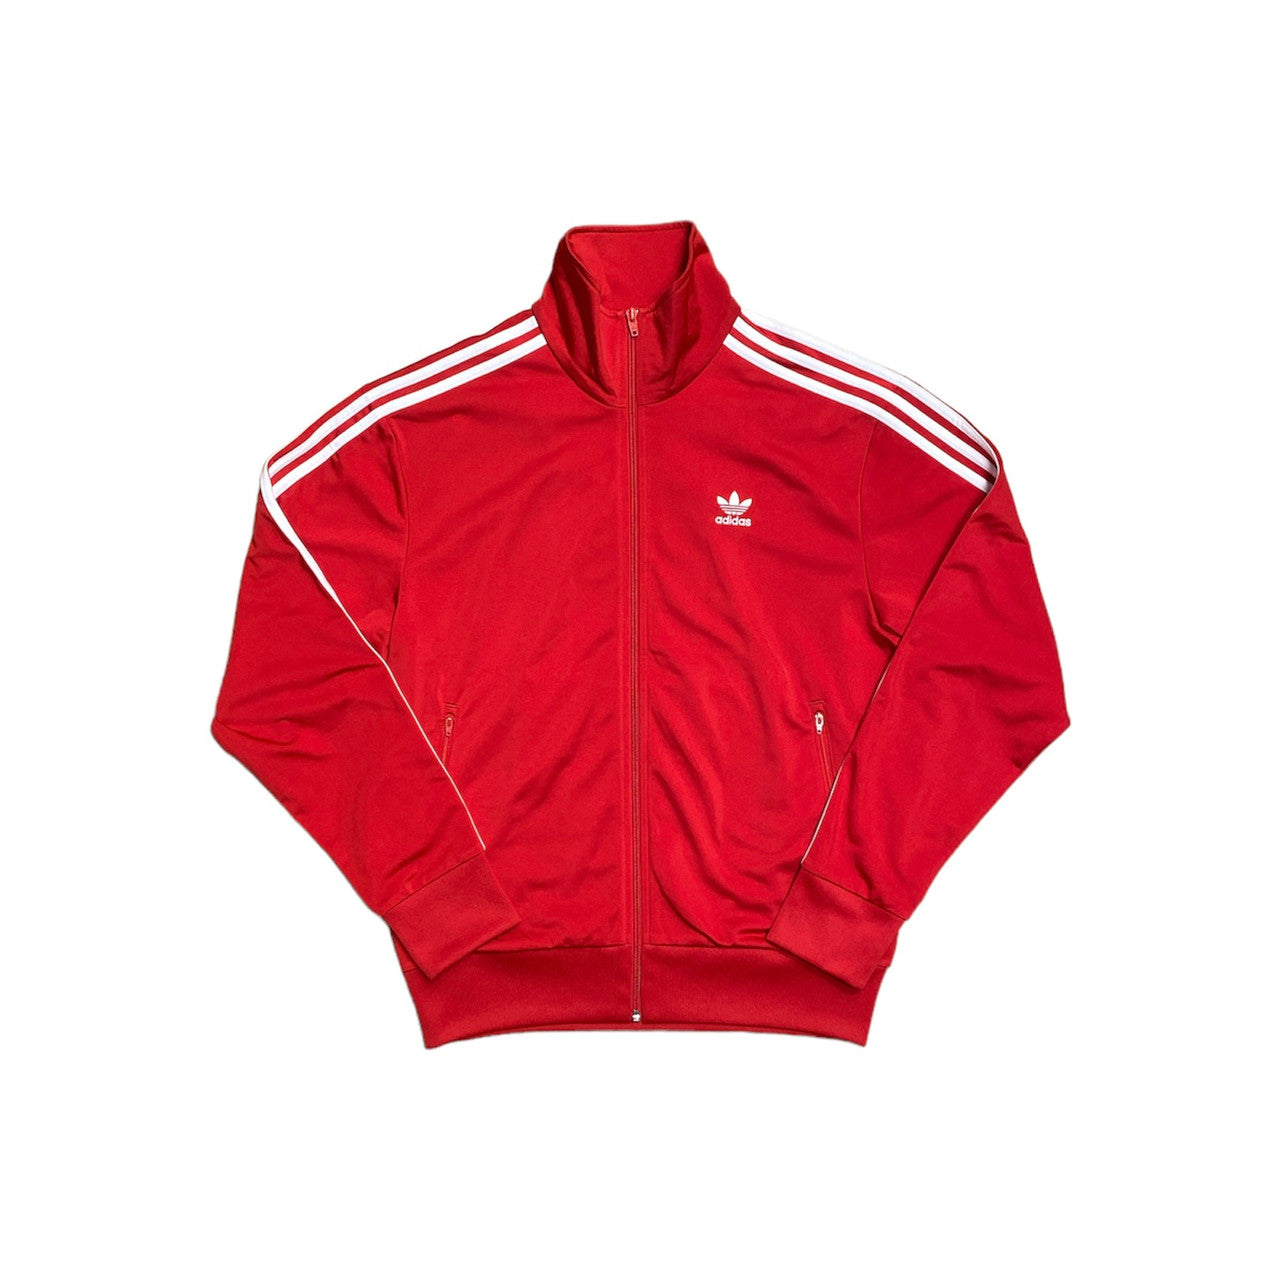 Adidas Red White Track Jacket